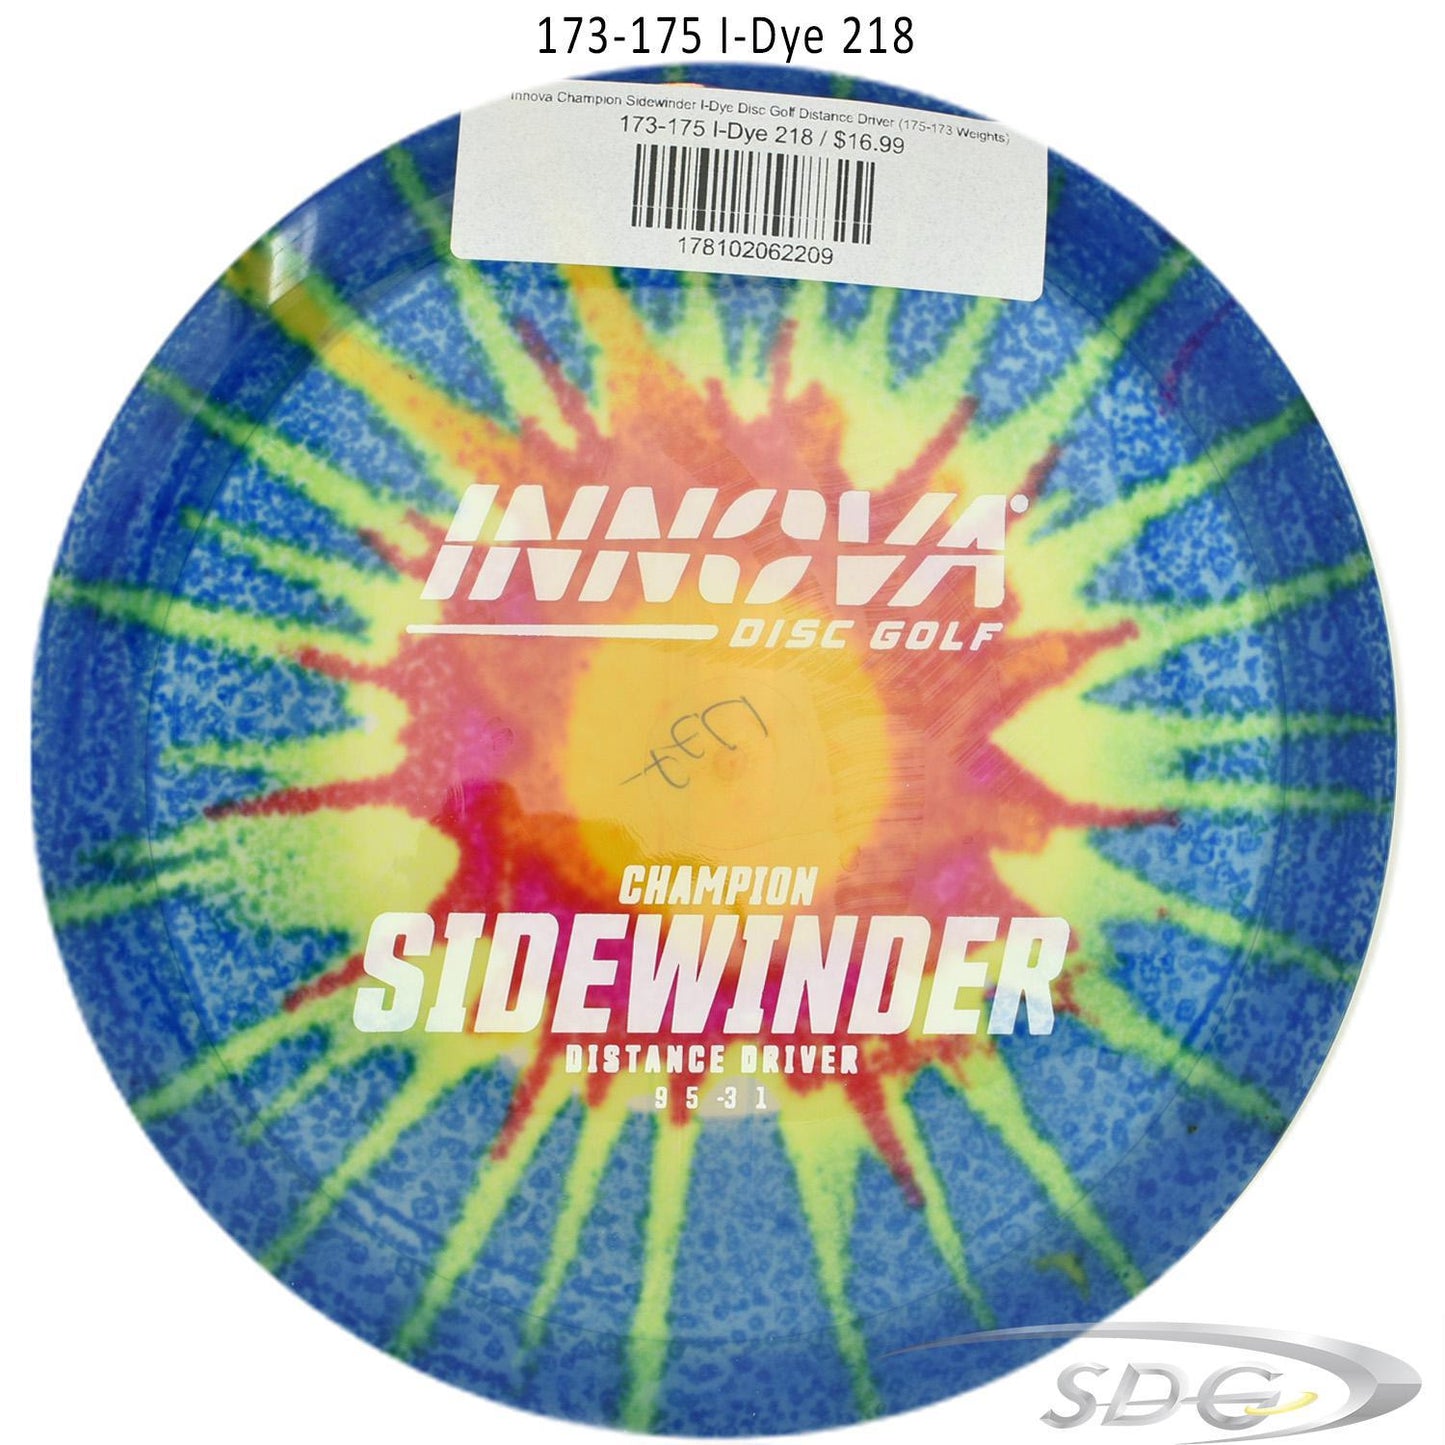 innova-champion-sidewinder-i-dye-disc-golf-distance-driver 173-175 I-Dye 218 